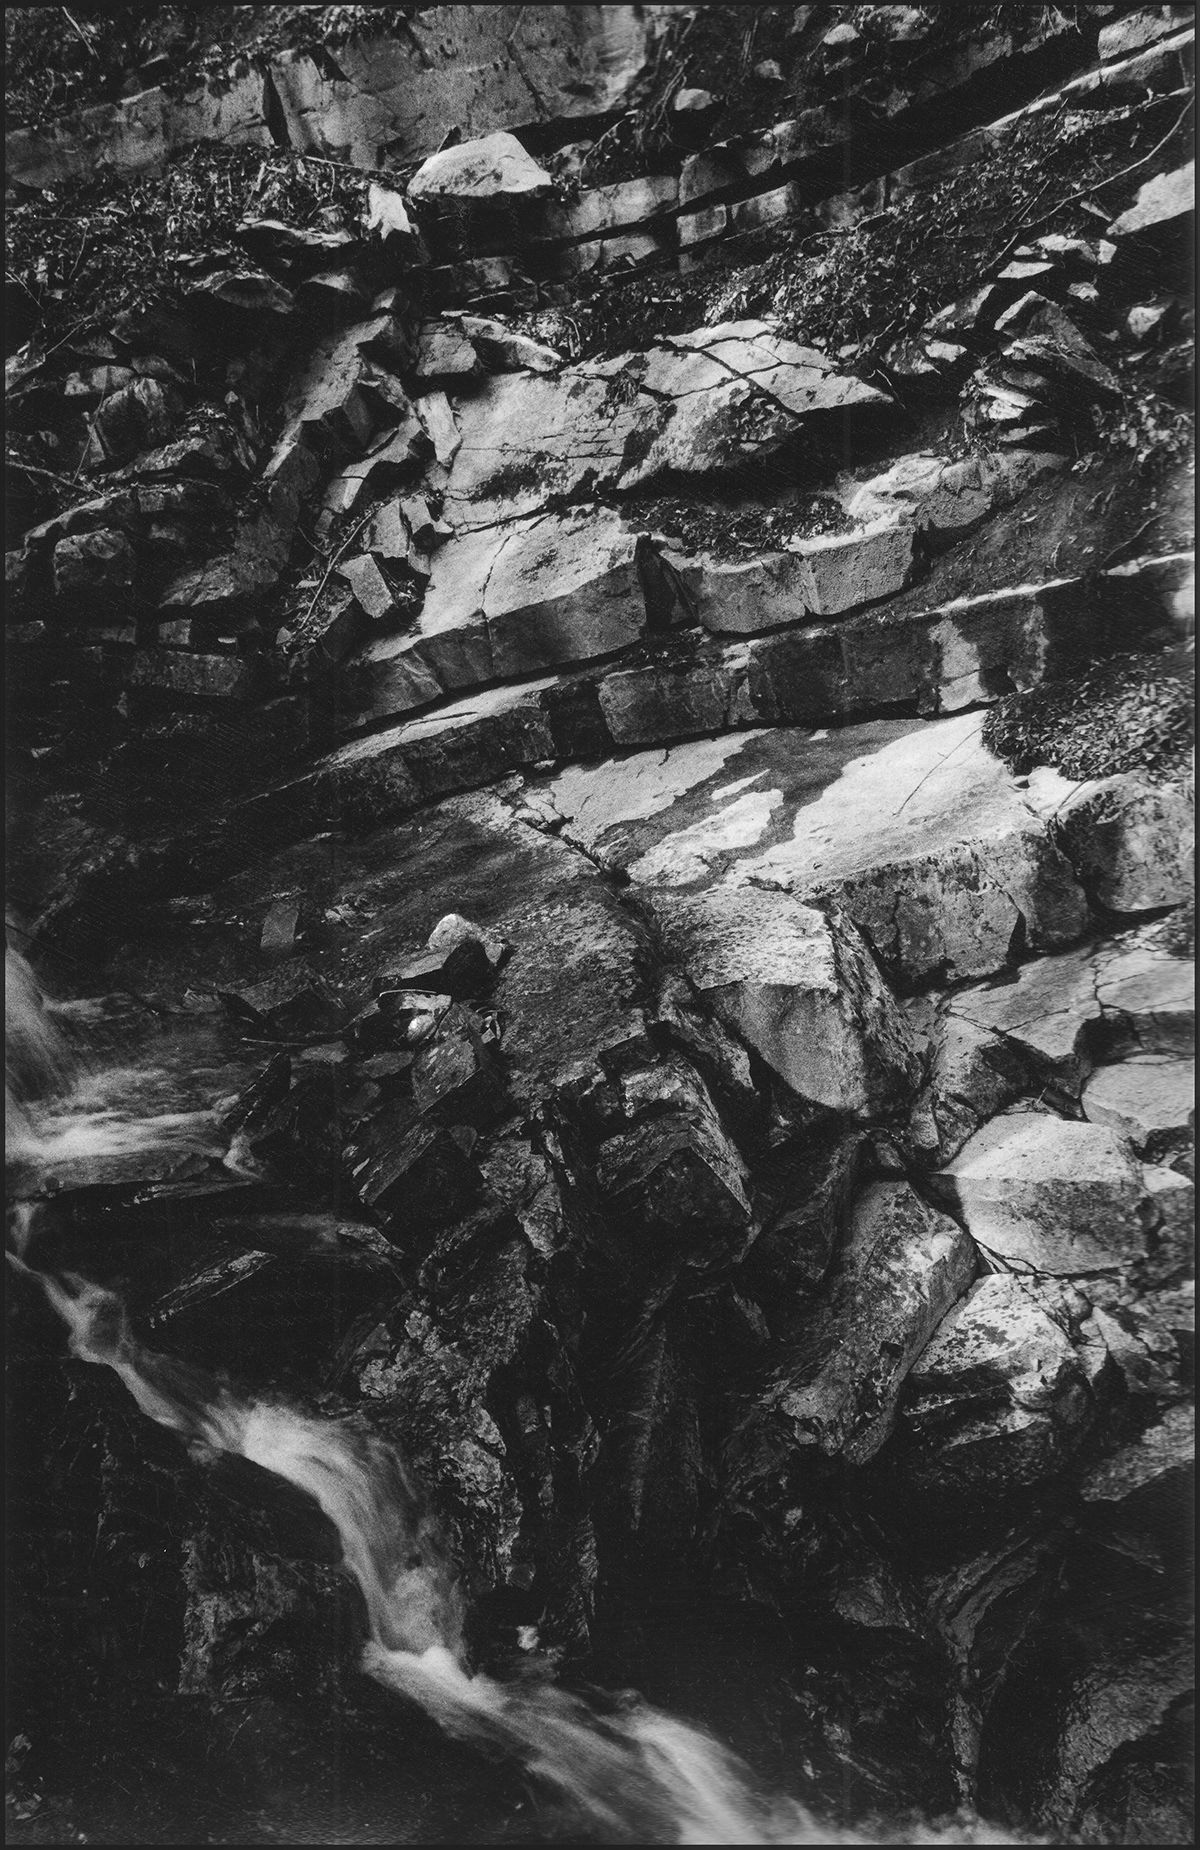 Fujica STX1 Landscape black and white silverprint boulders creek